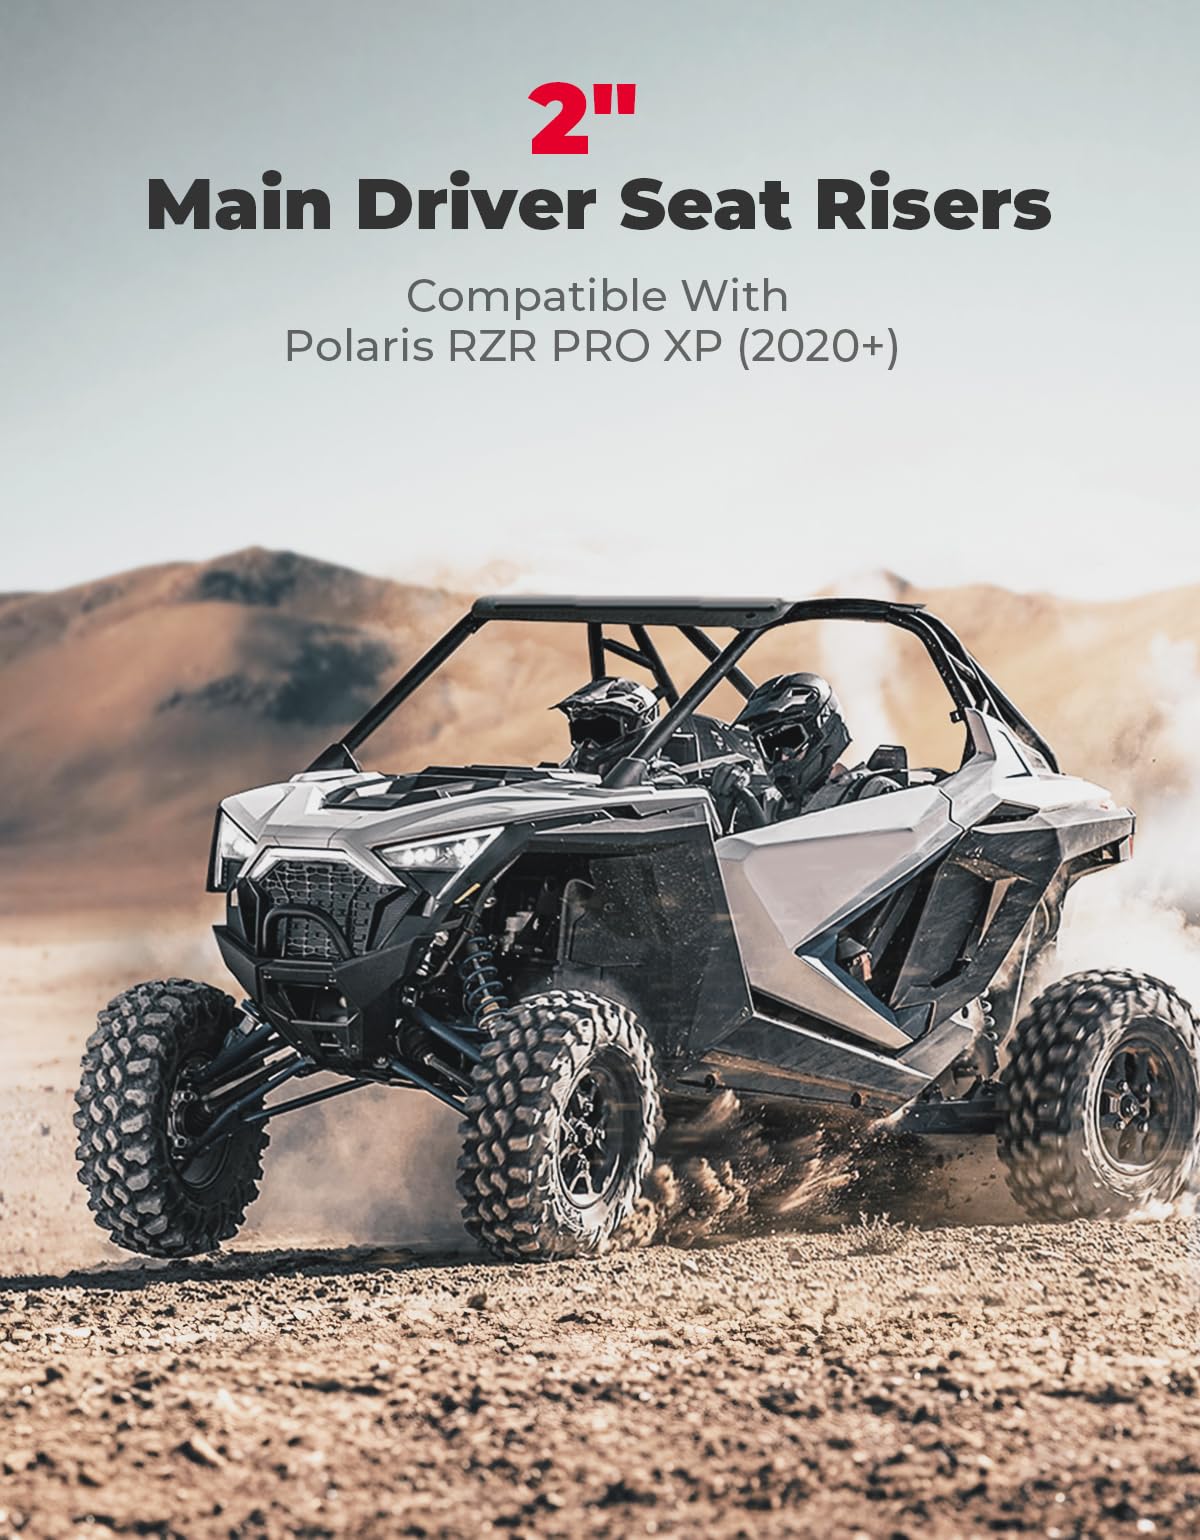 KEMIMOTO Seat Risers Compatible with Polaris RZR PRO XP 2020+ Raises Seat  by 2 4PCS Passenger Seat Risers Black Get a Better Passenger View Give You